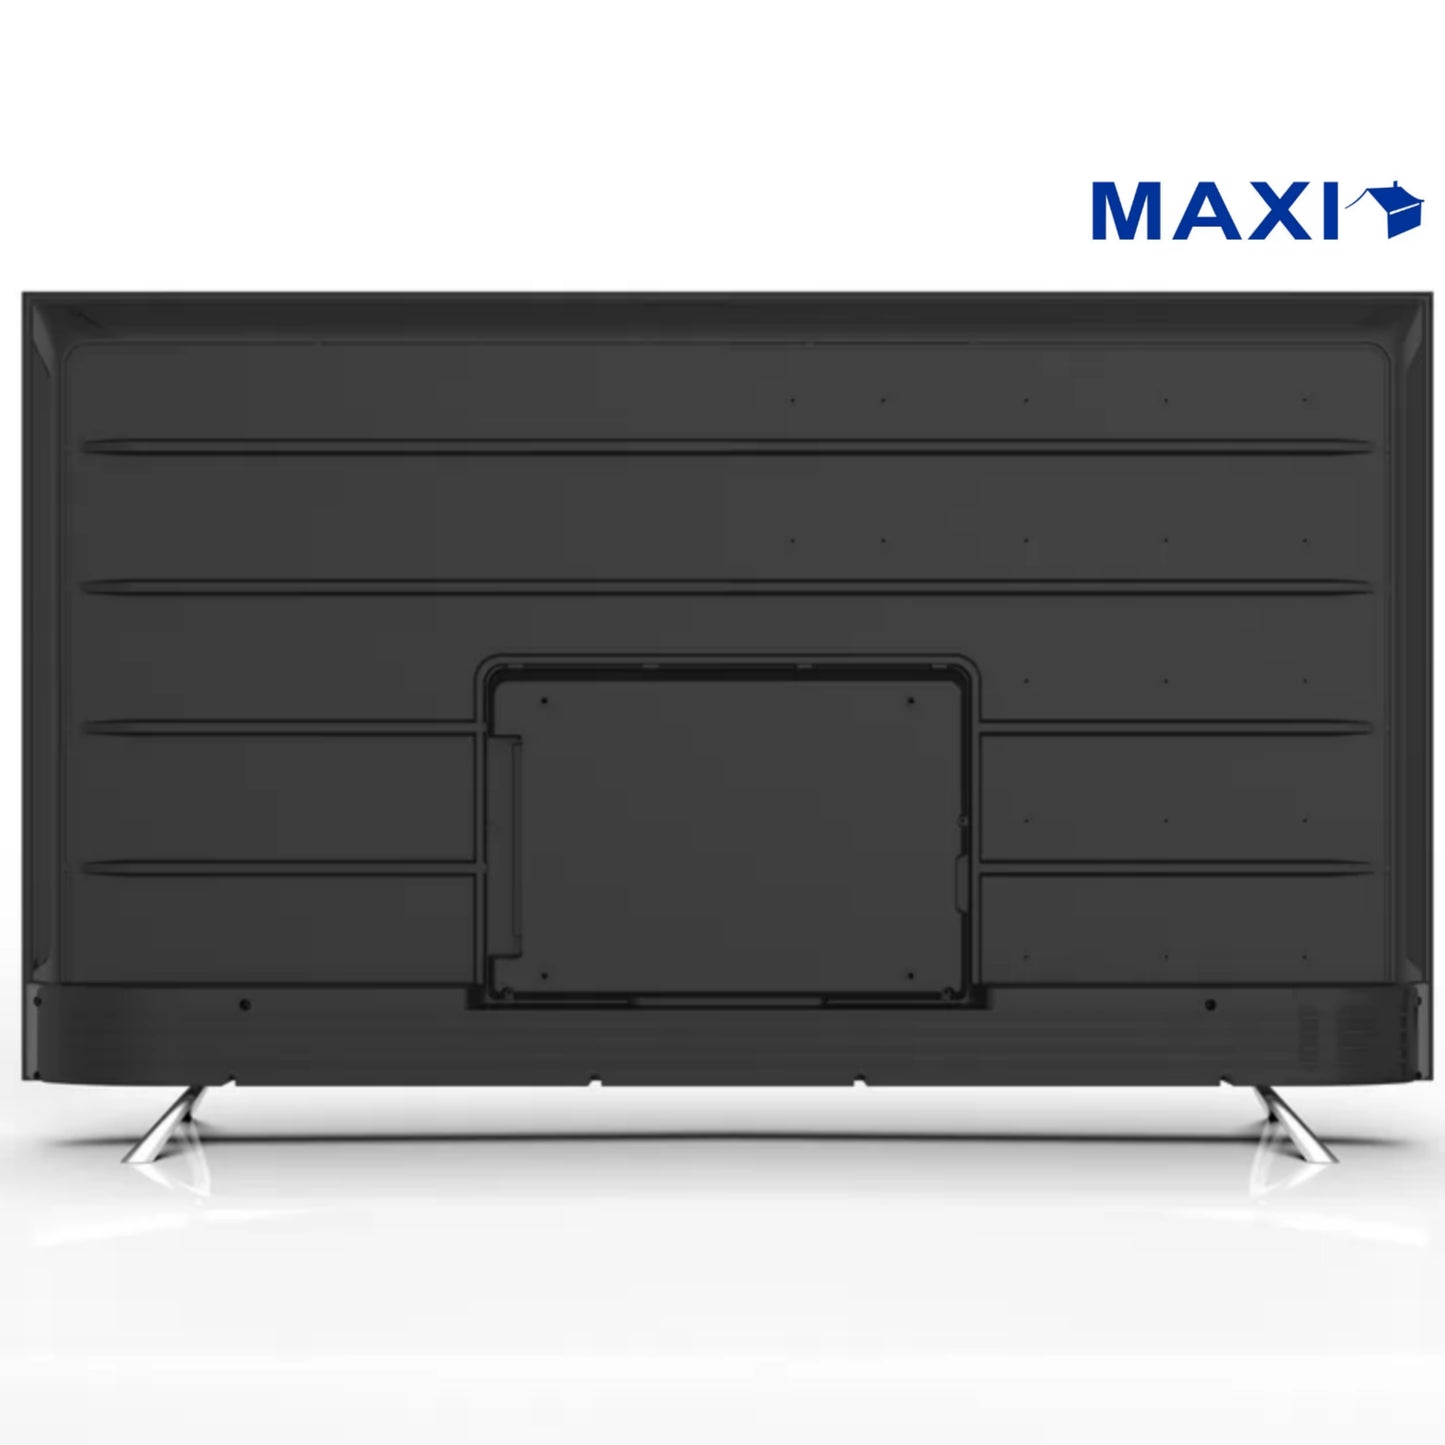 Maxi 70 Inch 70D2010 Smart Ultra HD LED TV + Netflix, Youtube, Miracast (Back View) - Brand New